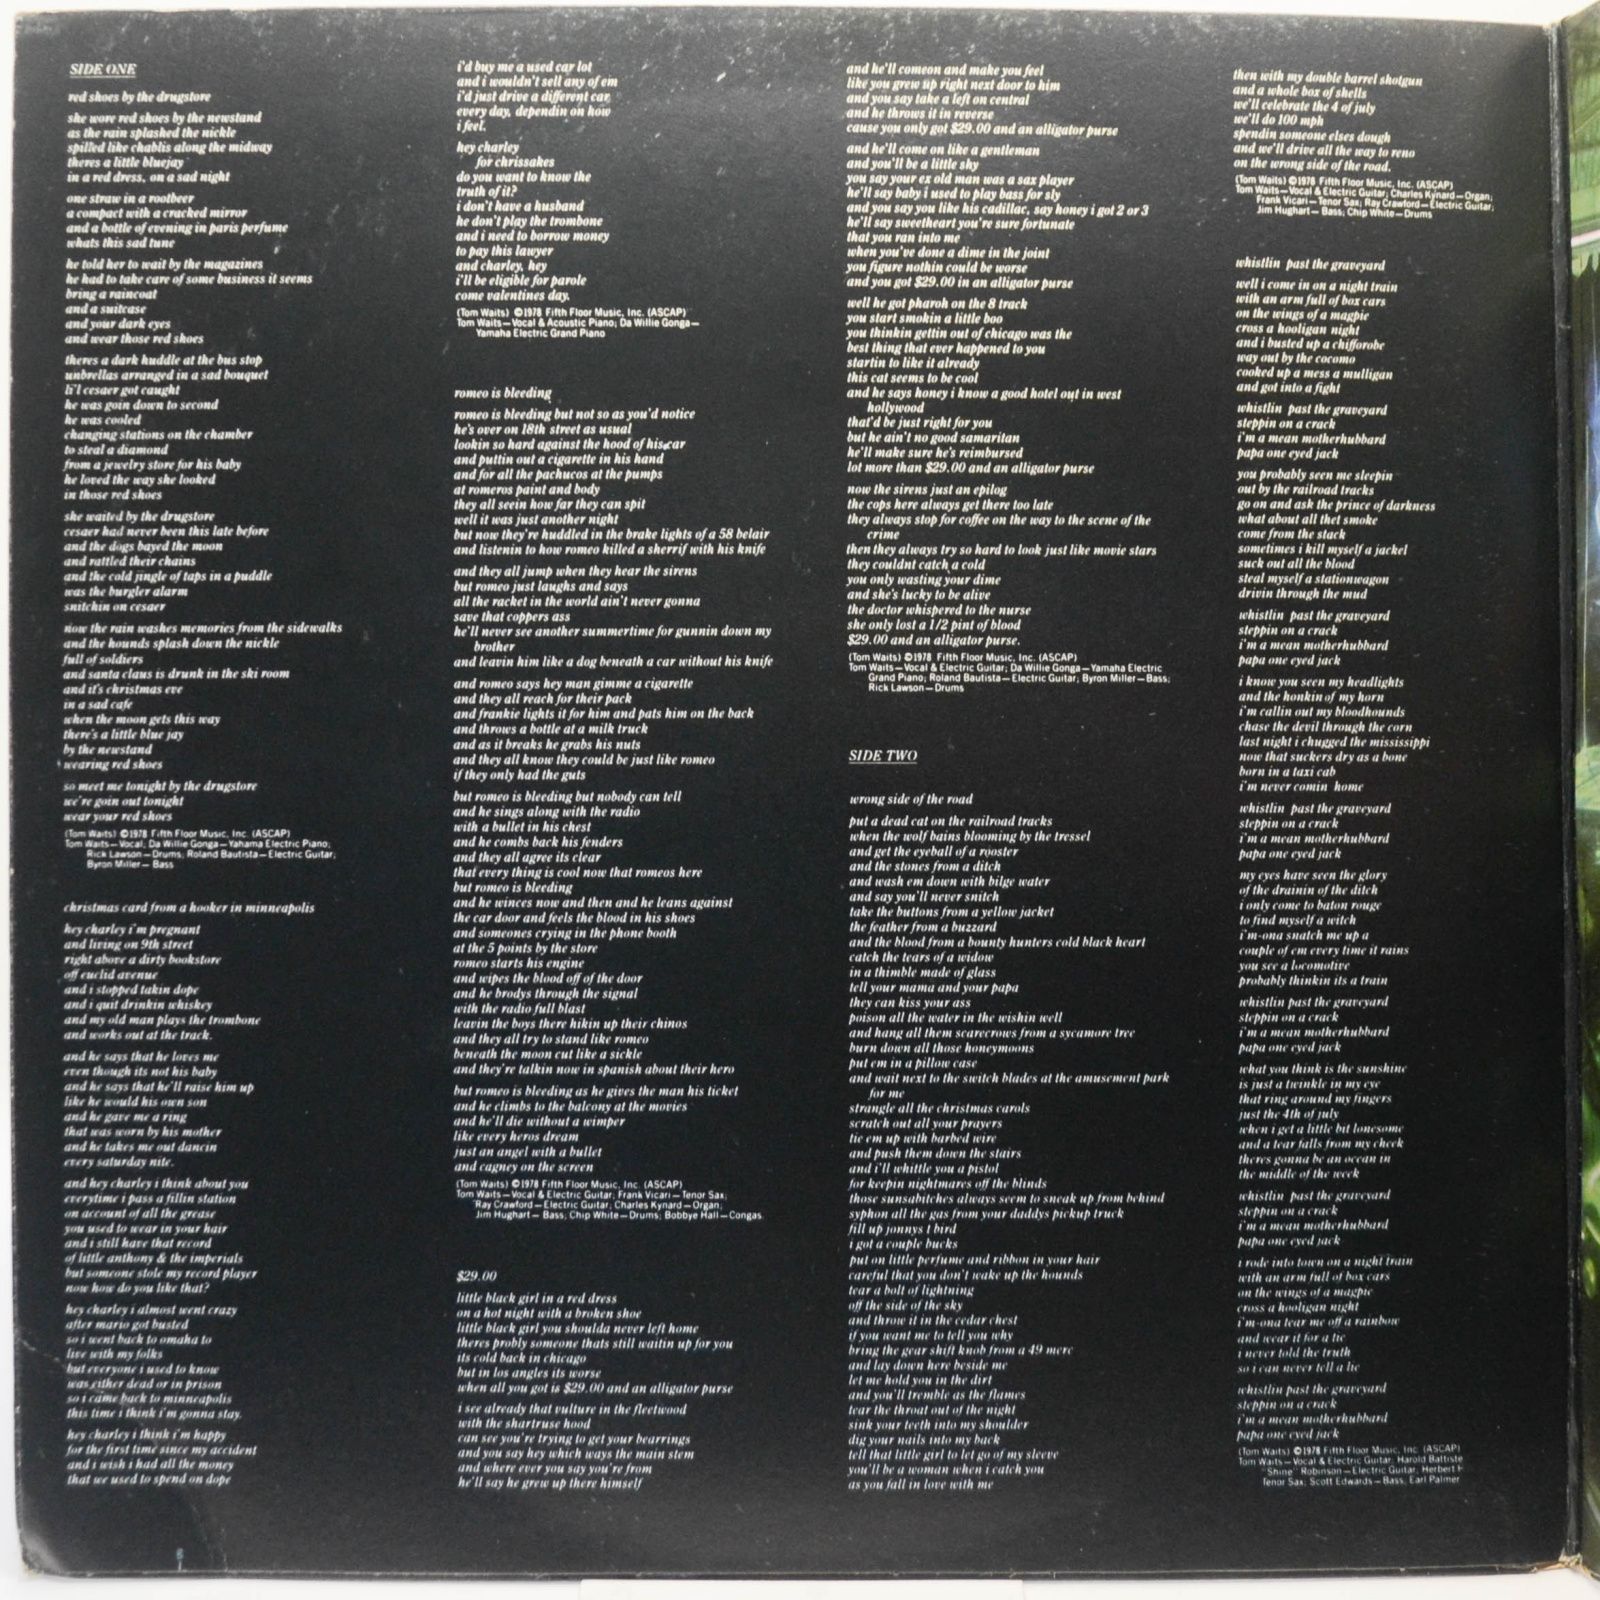 Tom Waits — Blue Valentine, 1978